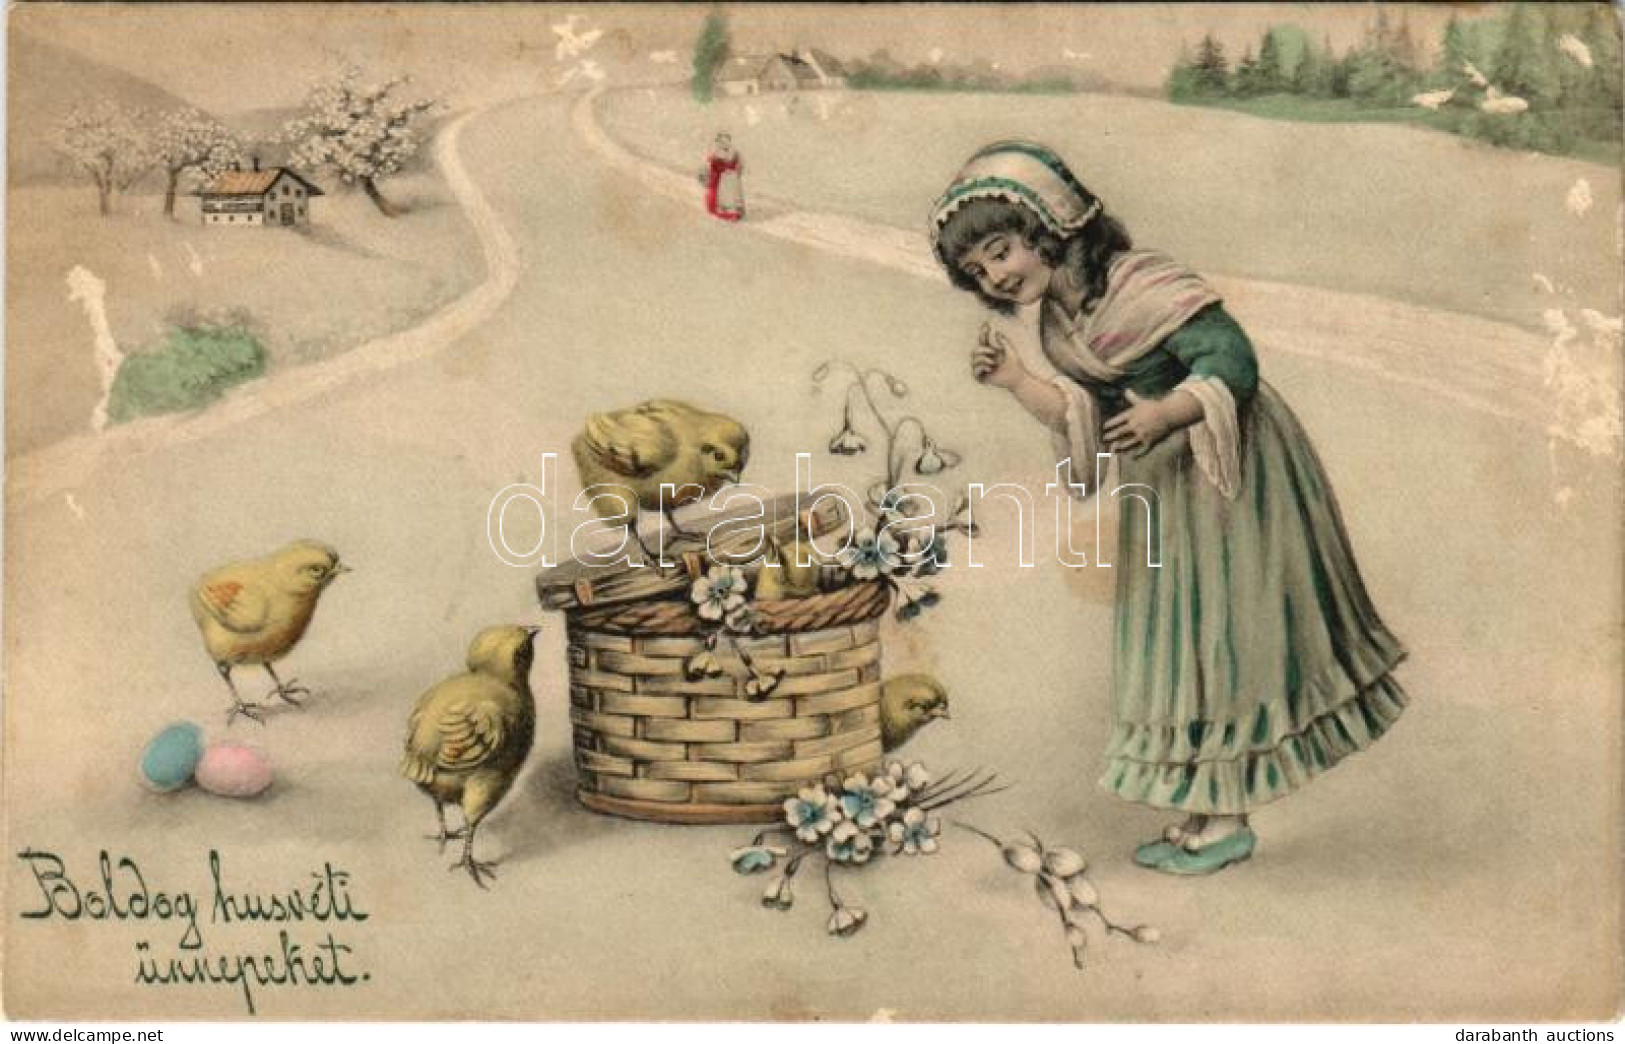 ** T2/T3 Boldog Húsvéti ünnepeket! / Easter Greeting Art Postcard, Girl With Chickens And Eggs. V.K. Vienne 4054. (fl) - Ohne Zuordnung